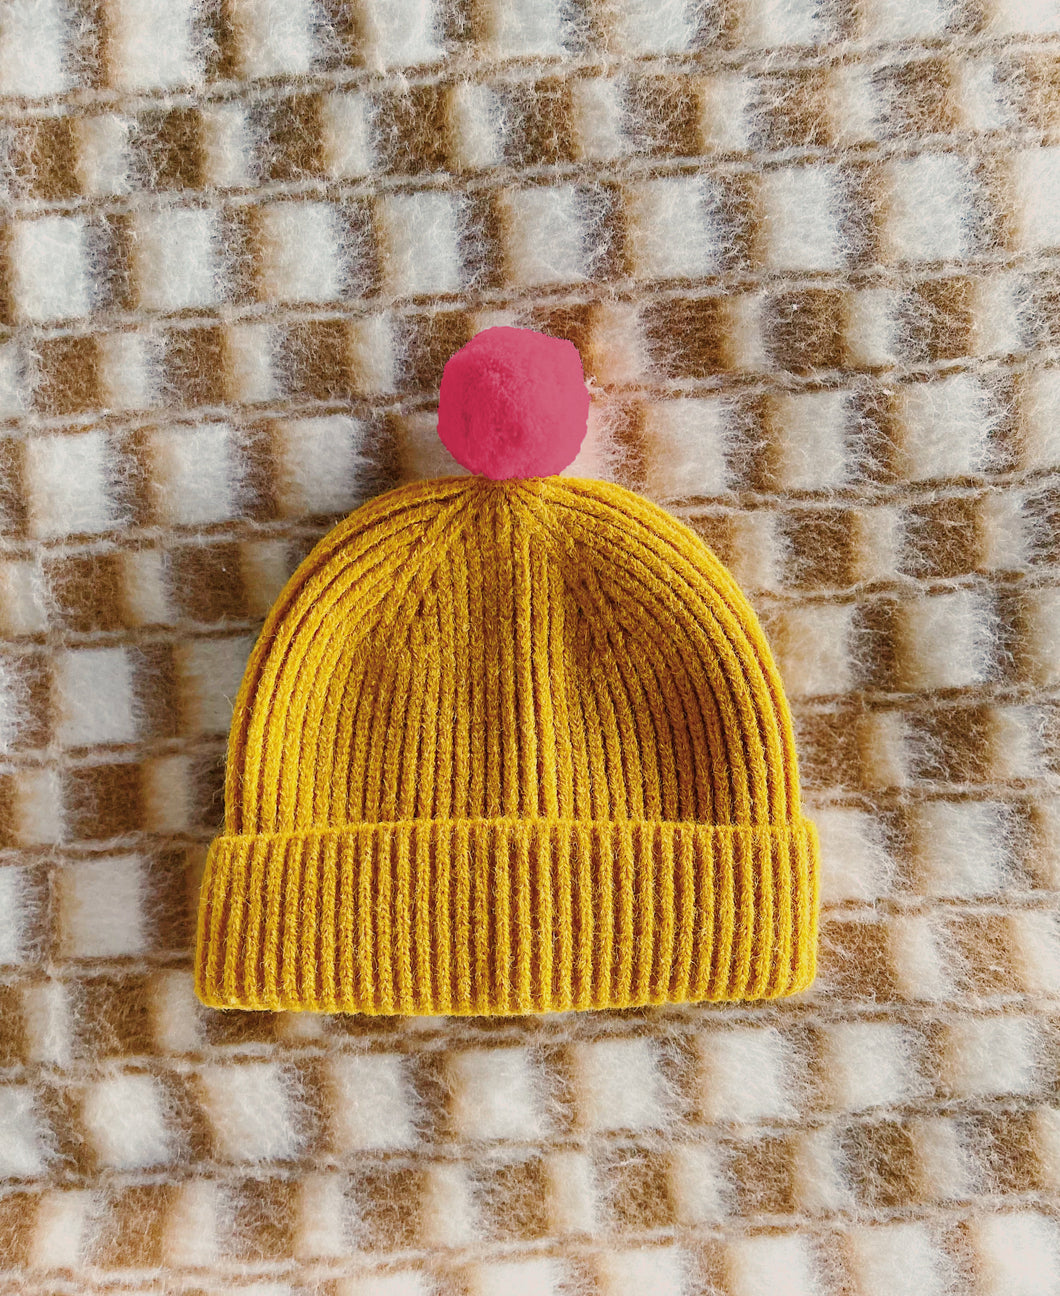 Fisherman Short Rib-Knit Beanie Cap - Mustard Yellow with Coral Pink Pom Pom